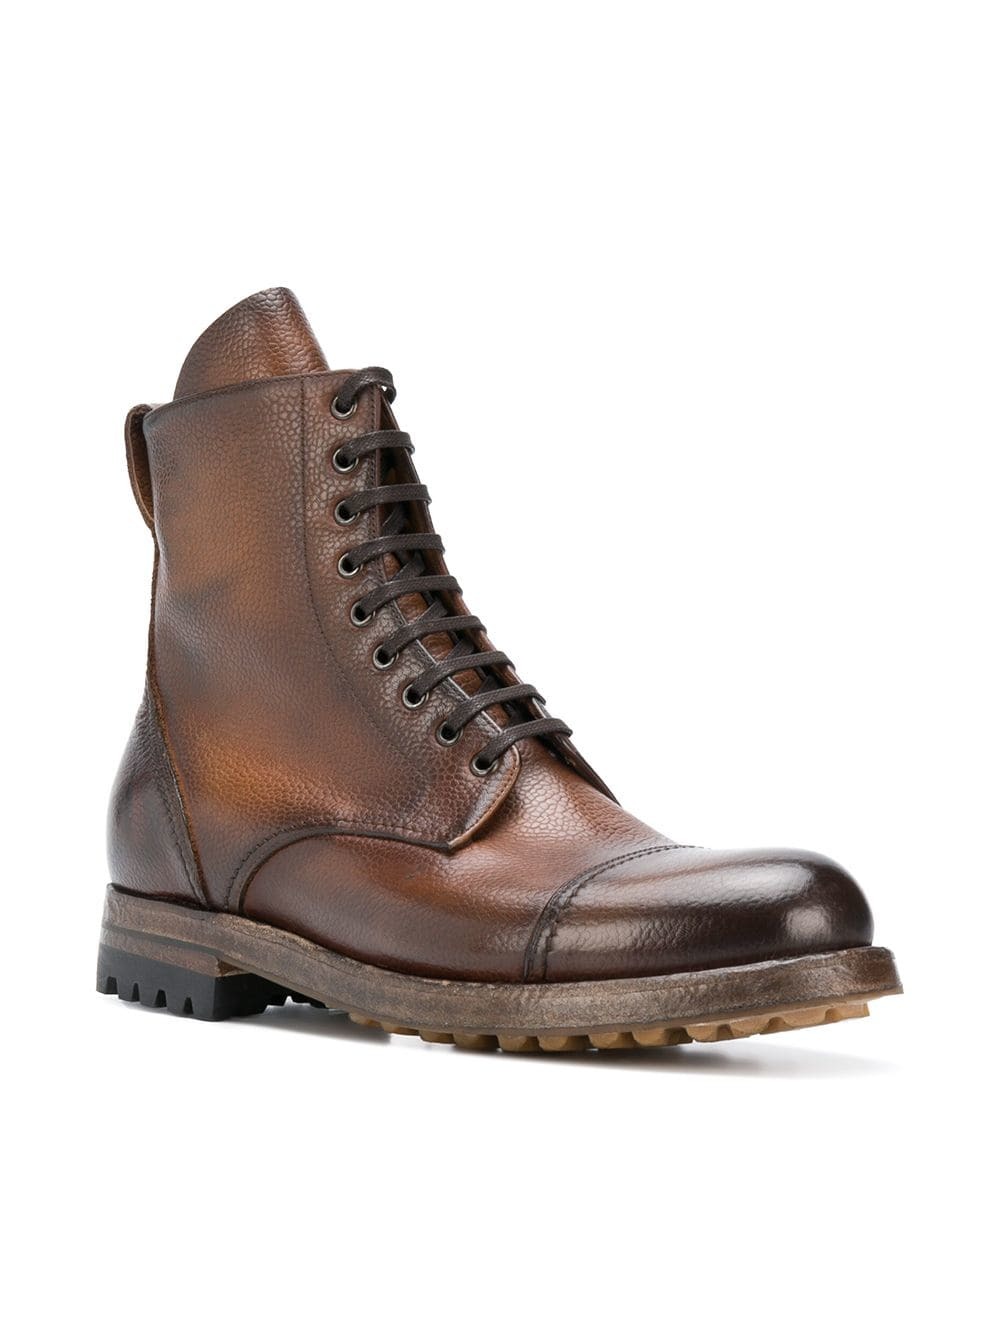 Silvano Sassetti Aged Effect Boots, $586 | farfetch.com | Lookastic